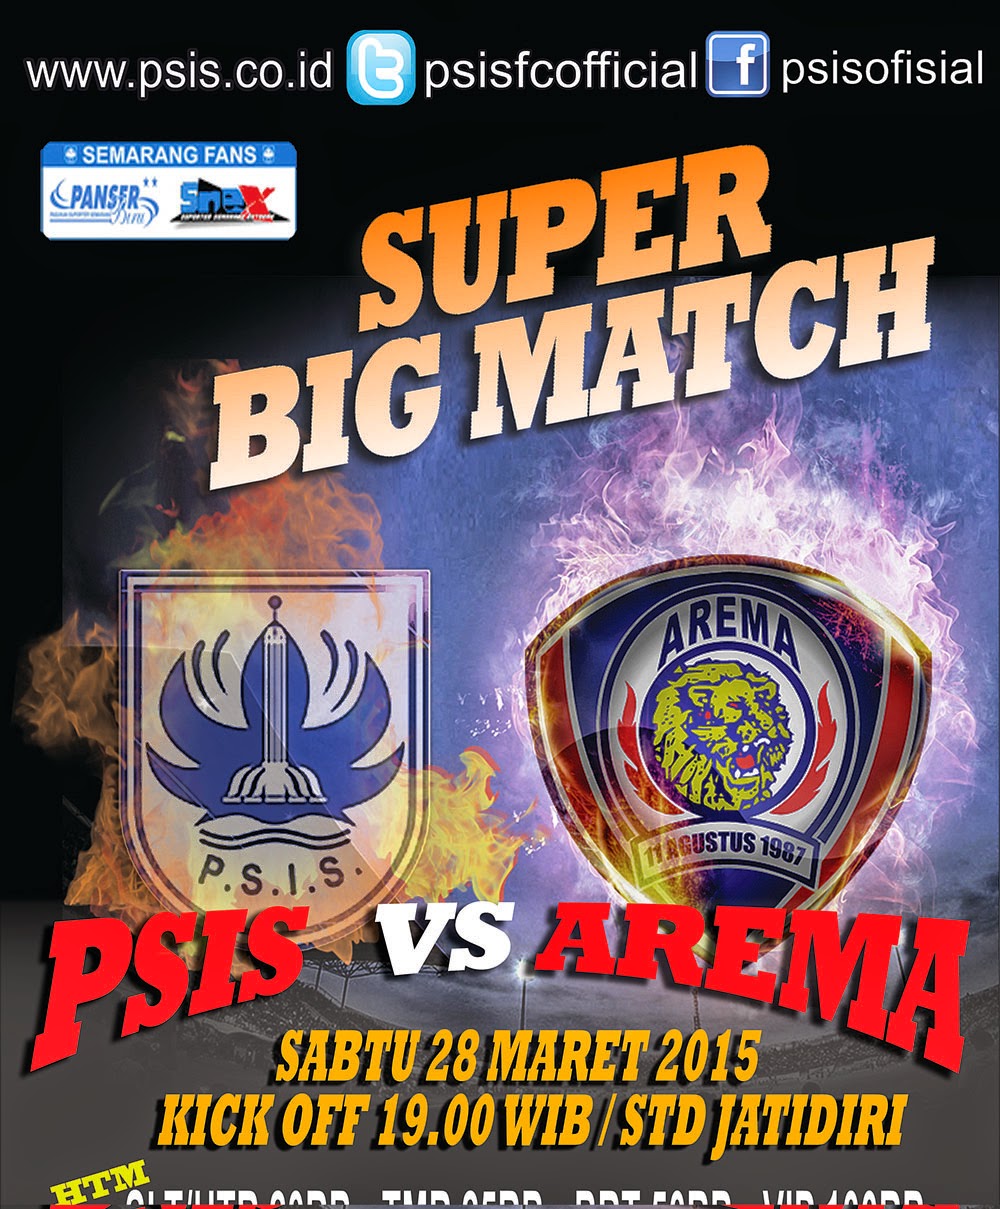 Prediksi Skor Line Up PSIS Vs AREMA Friendly Match Sabtu 28